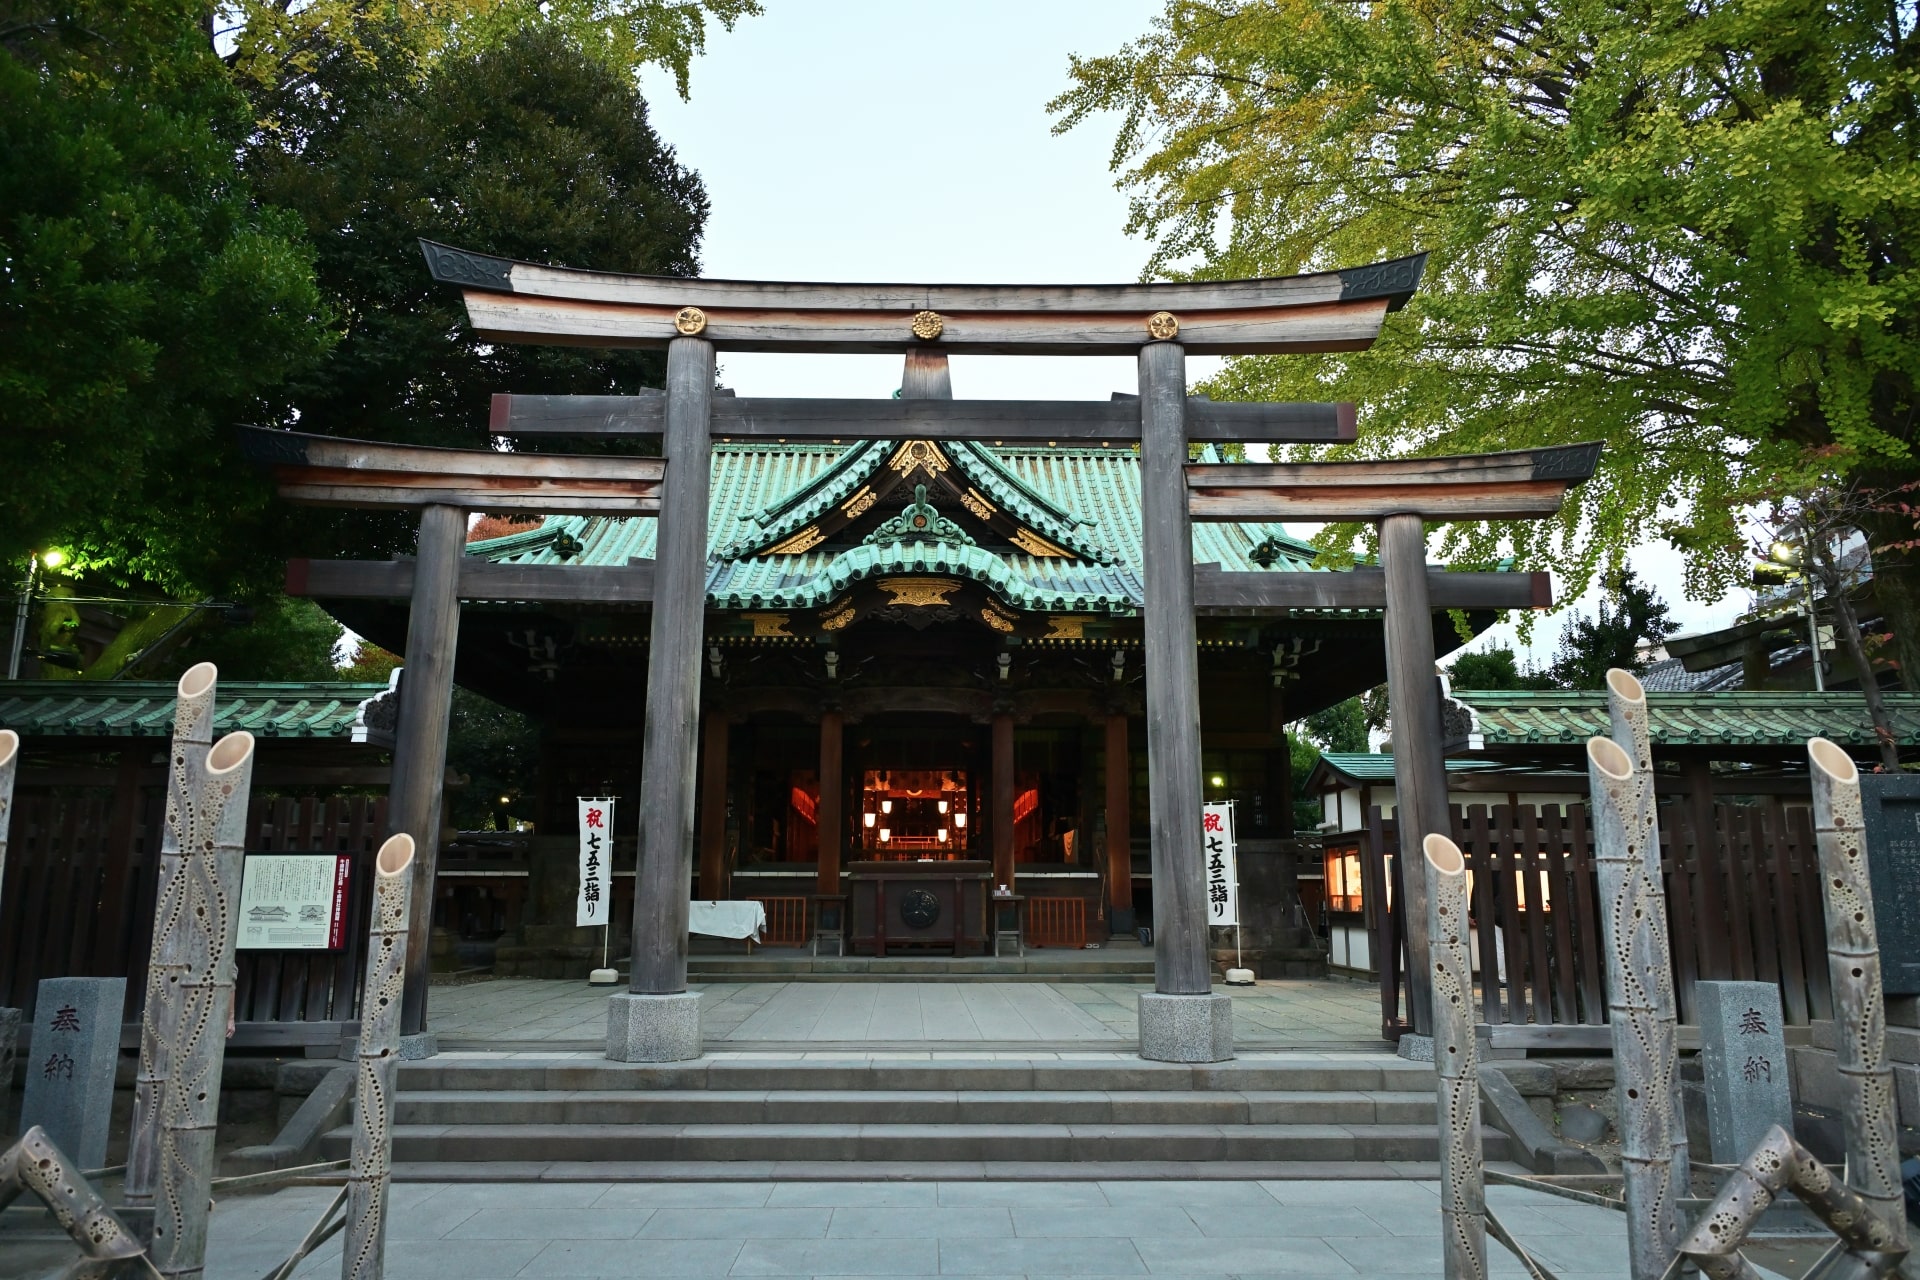 Ushijima Shrine with its triple torii gate